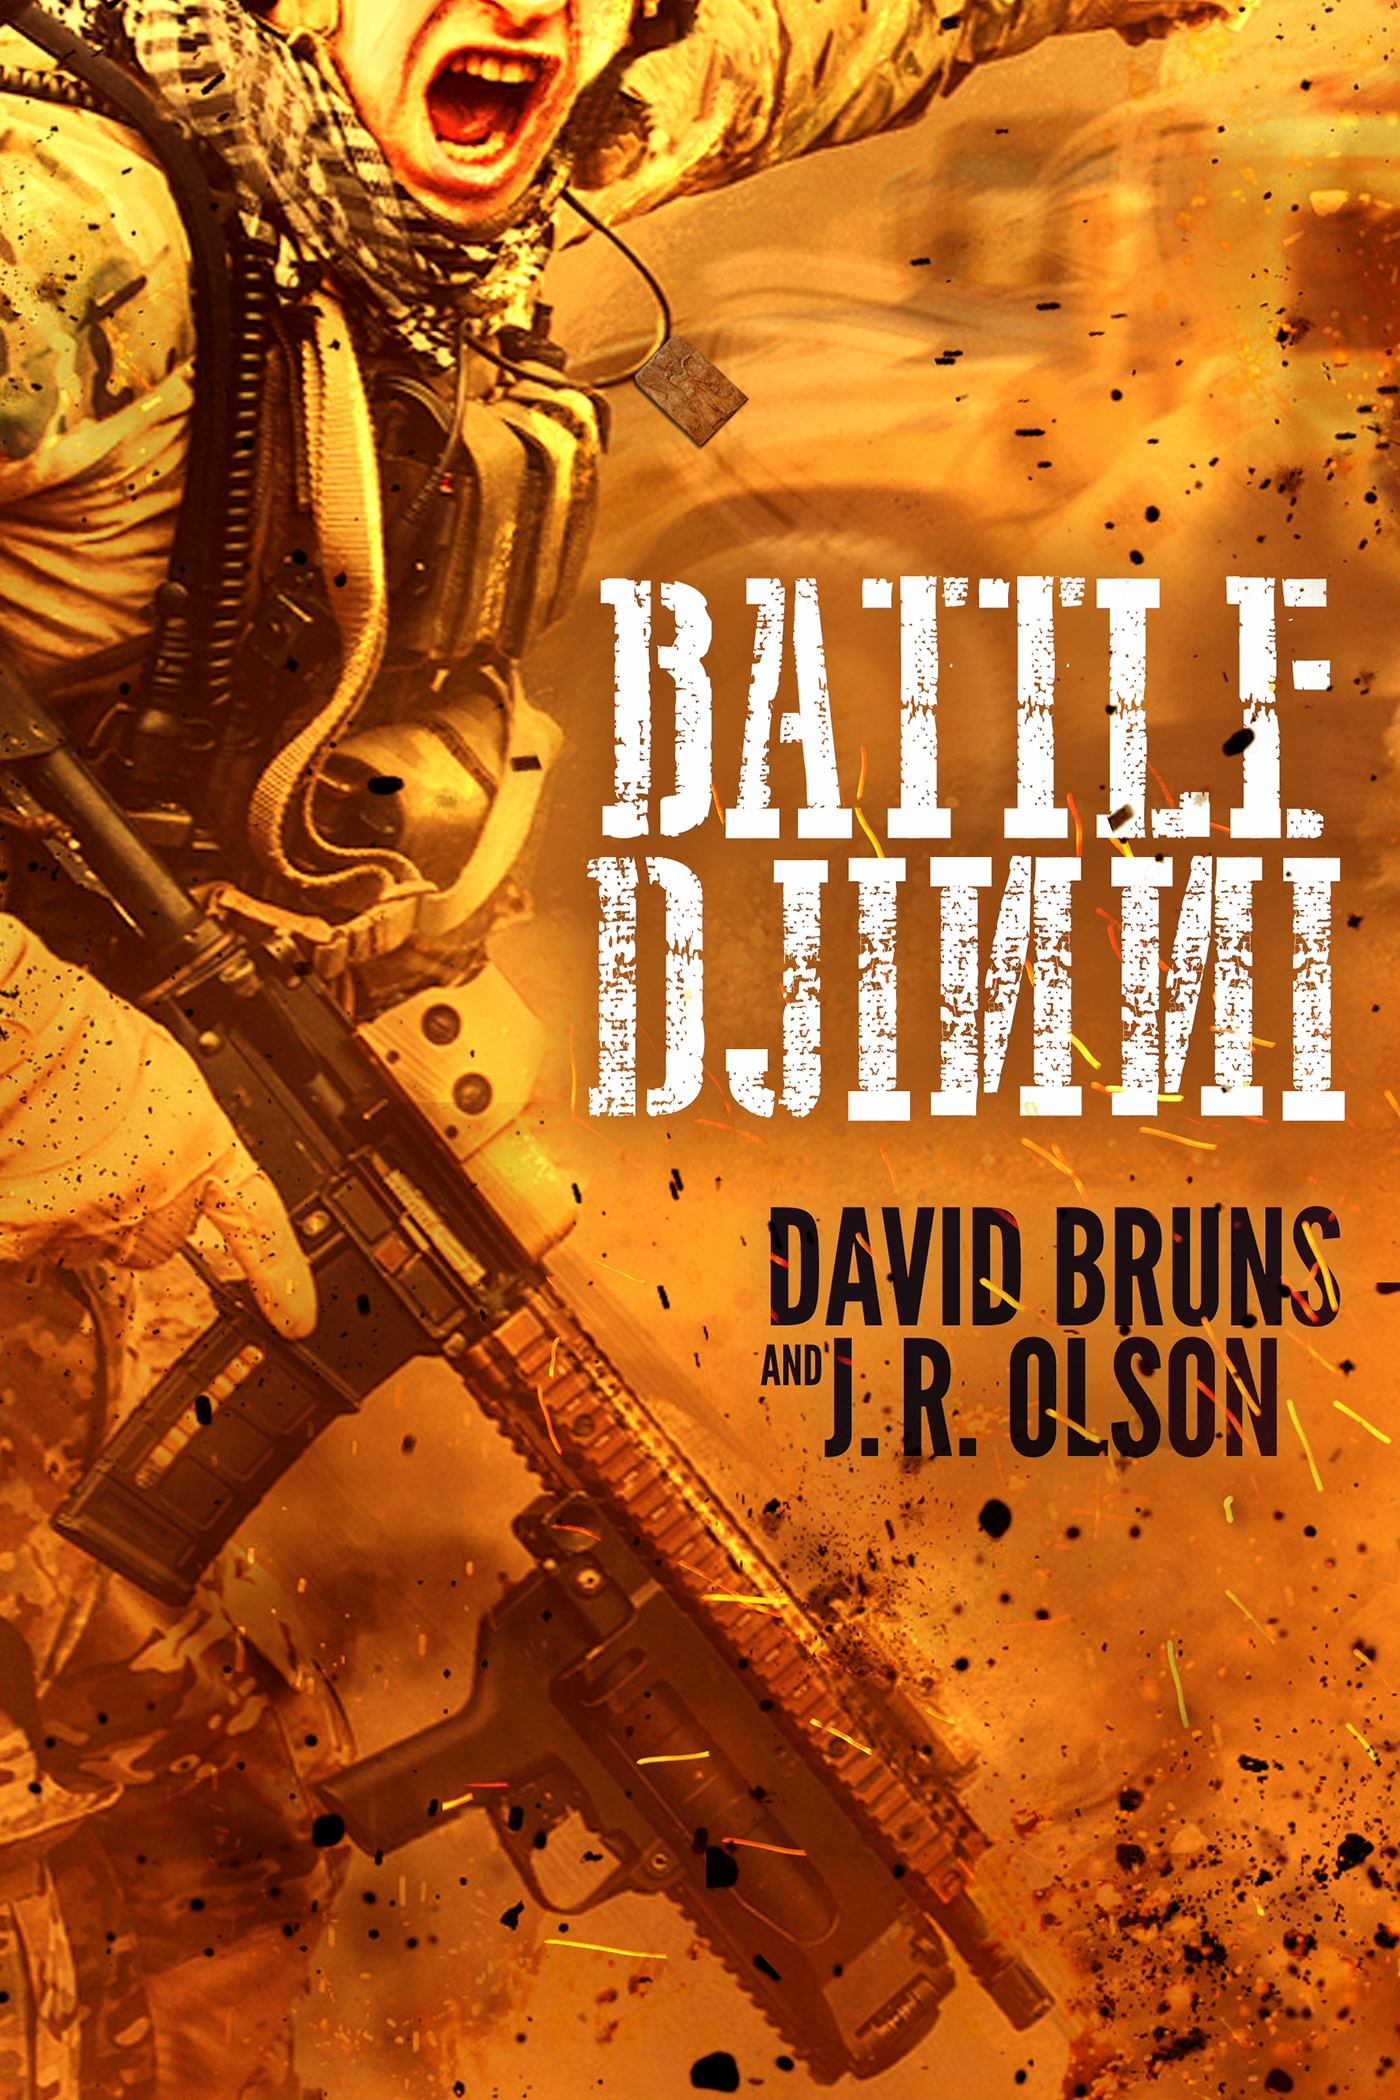 Battle Djinni: A Military Thriller Novella